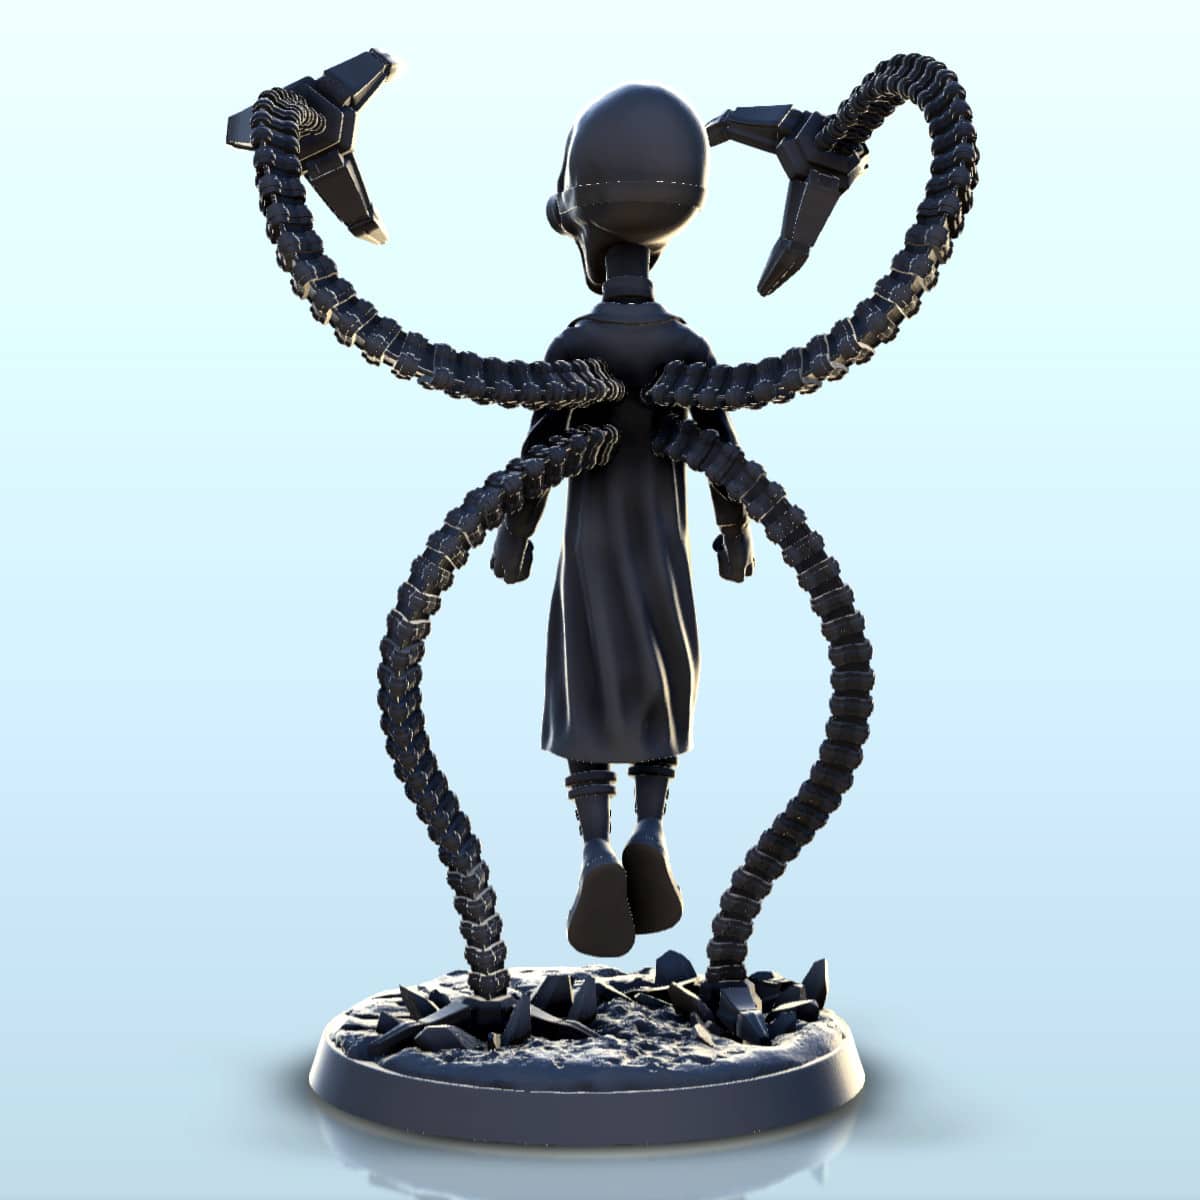 Upcoming Character Rebalances: 3* Doctor Octopus, 4* Dazzler, 5